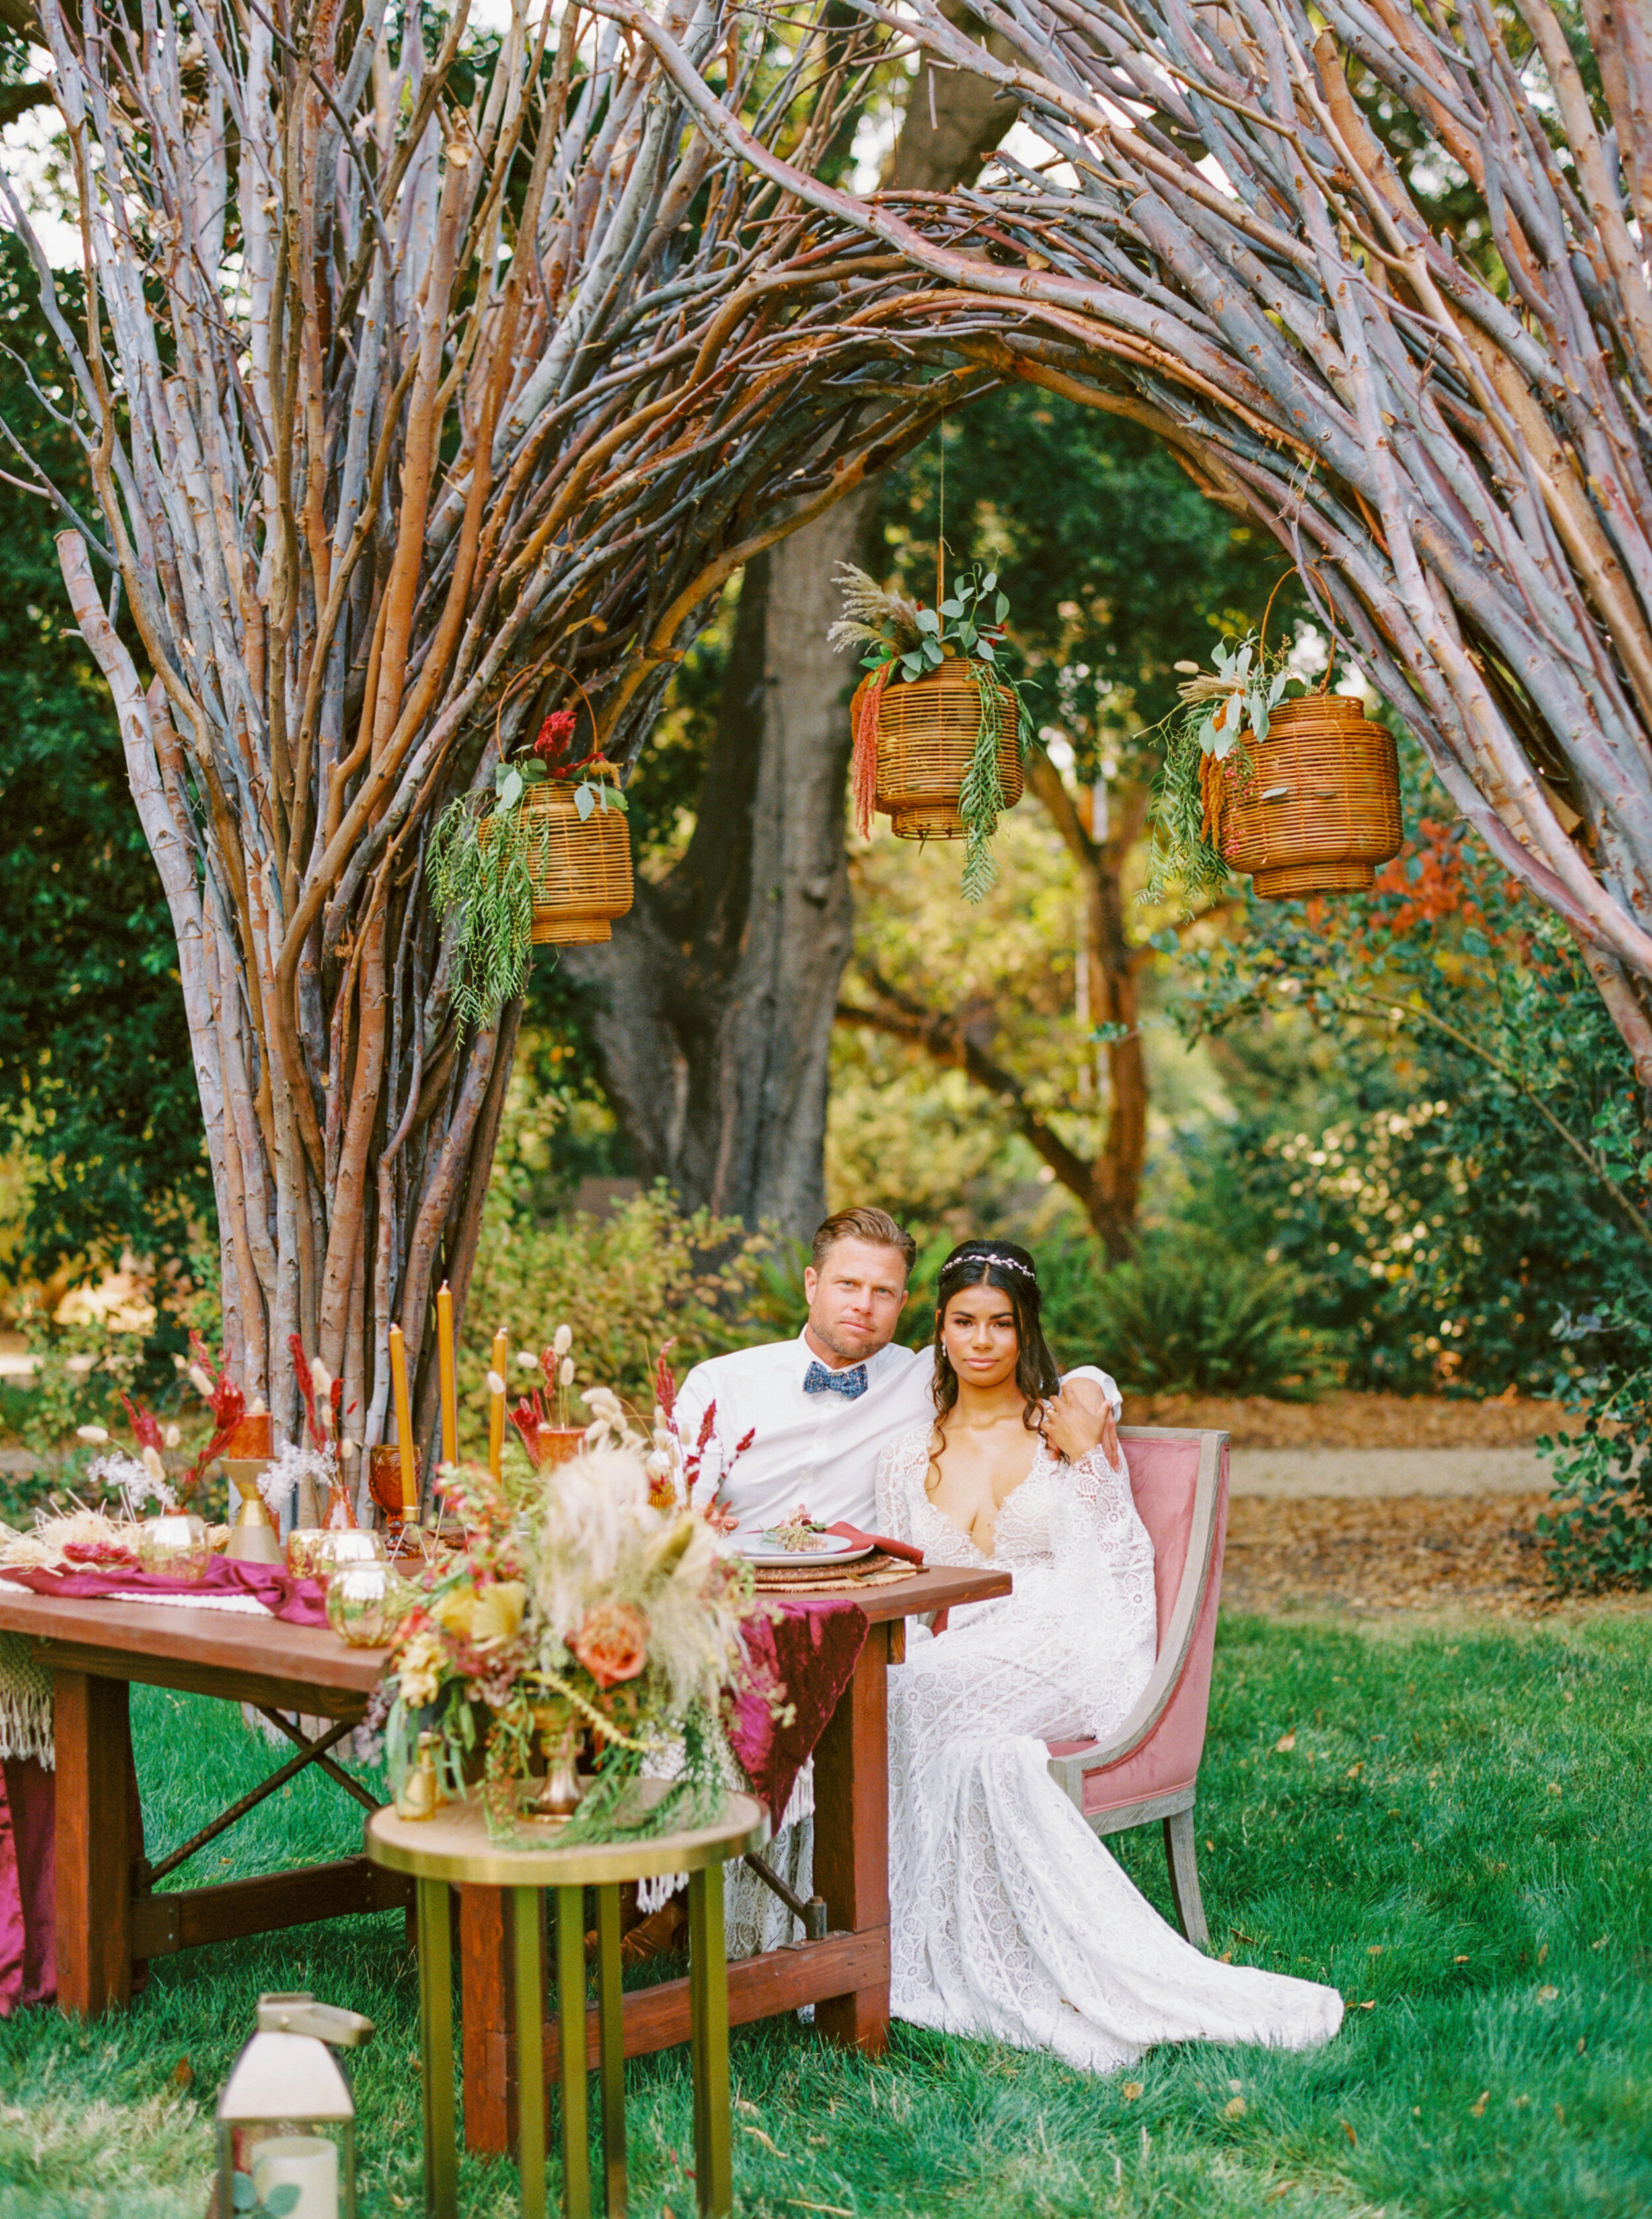 Sarahi Hadden - An Earthy Summer Boho Inspired Wedding with Sunset Hues at Gardener Ranch-9.jpg